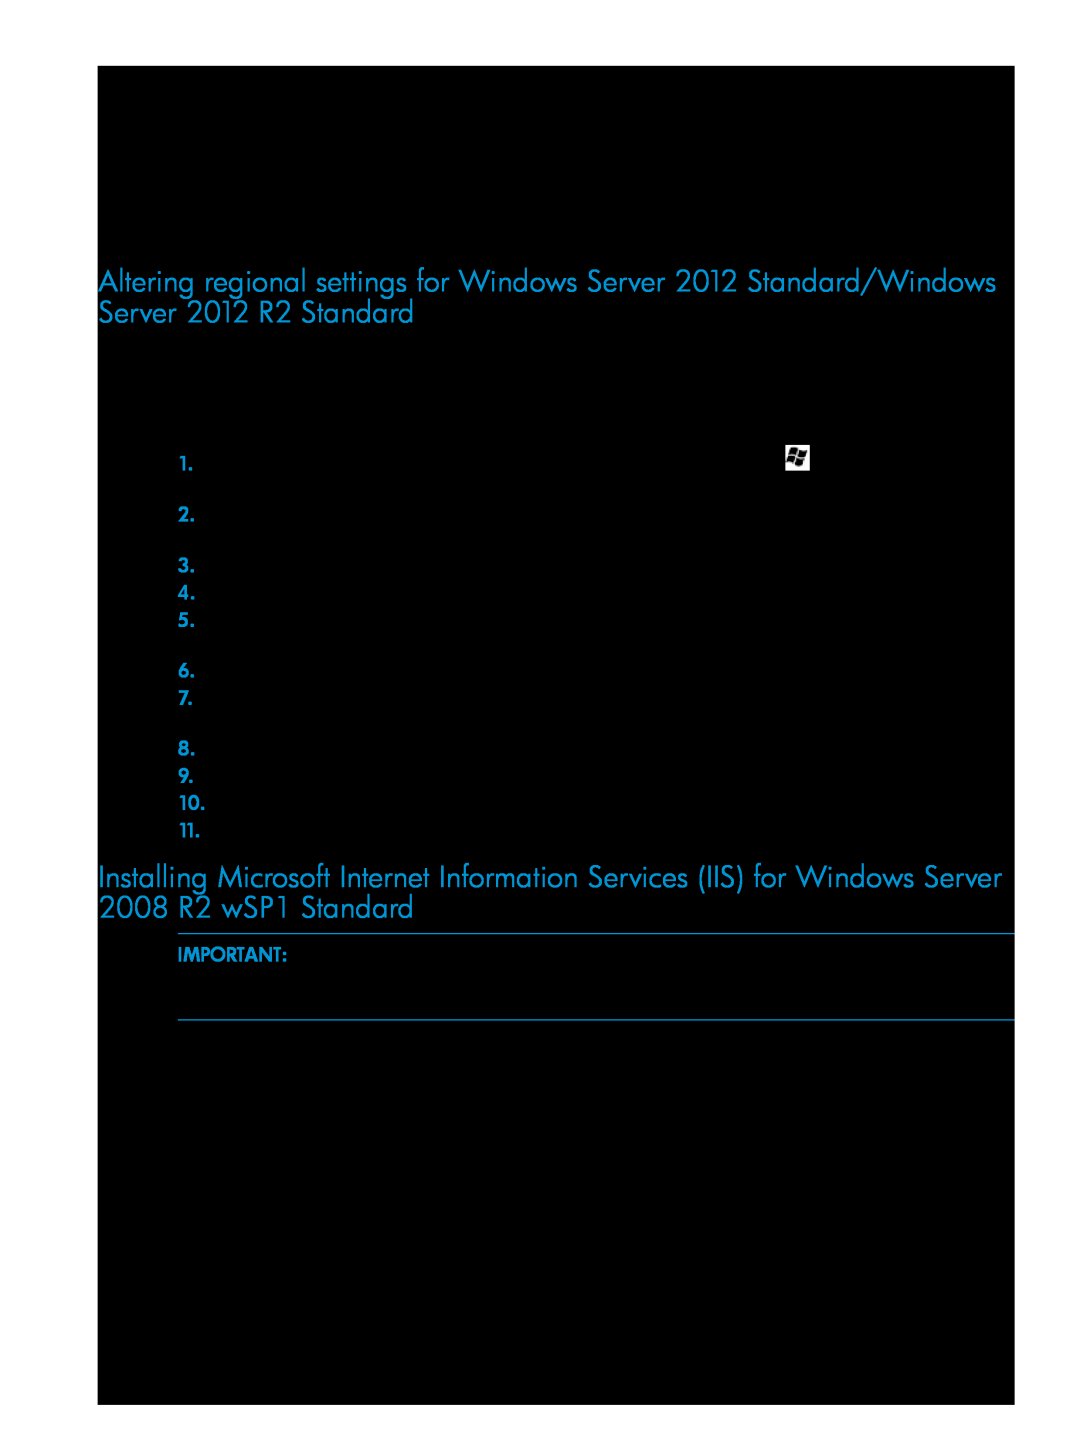 HP Microsoft Windows Server 2012 manual 